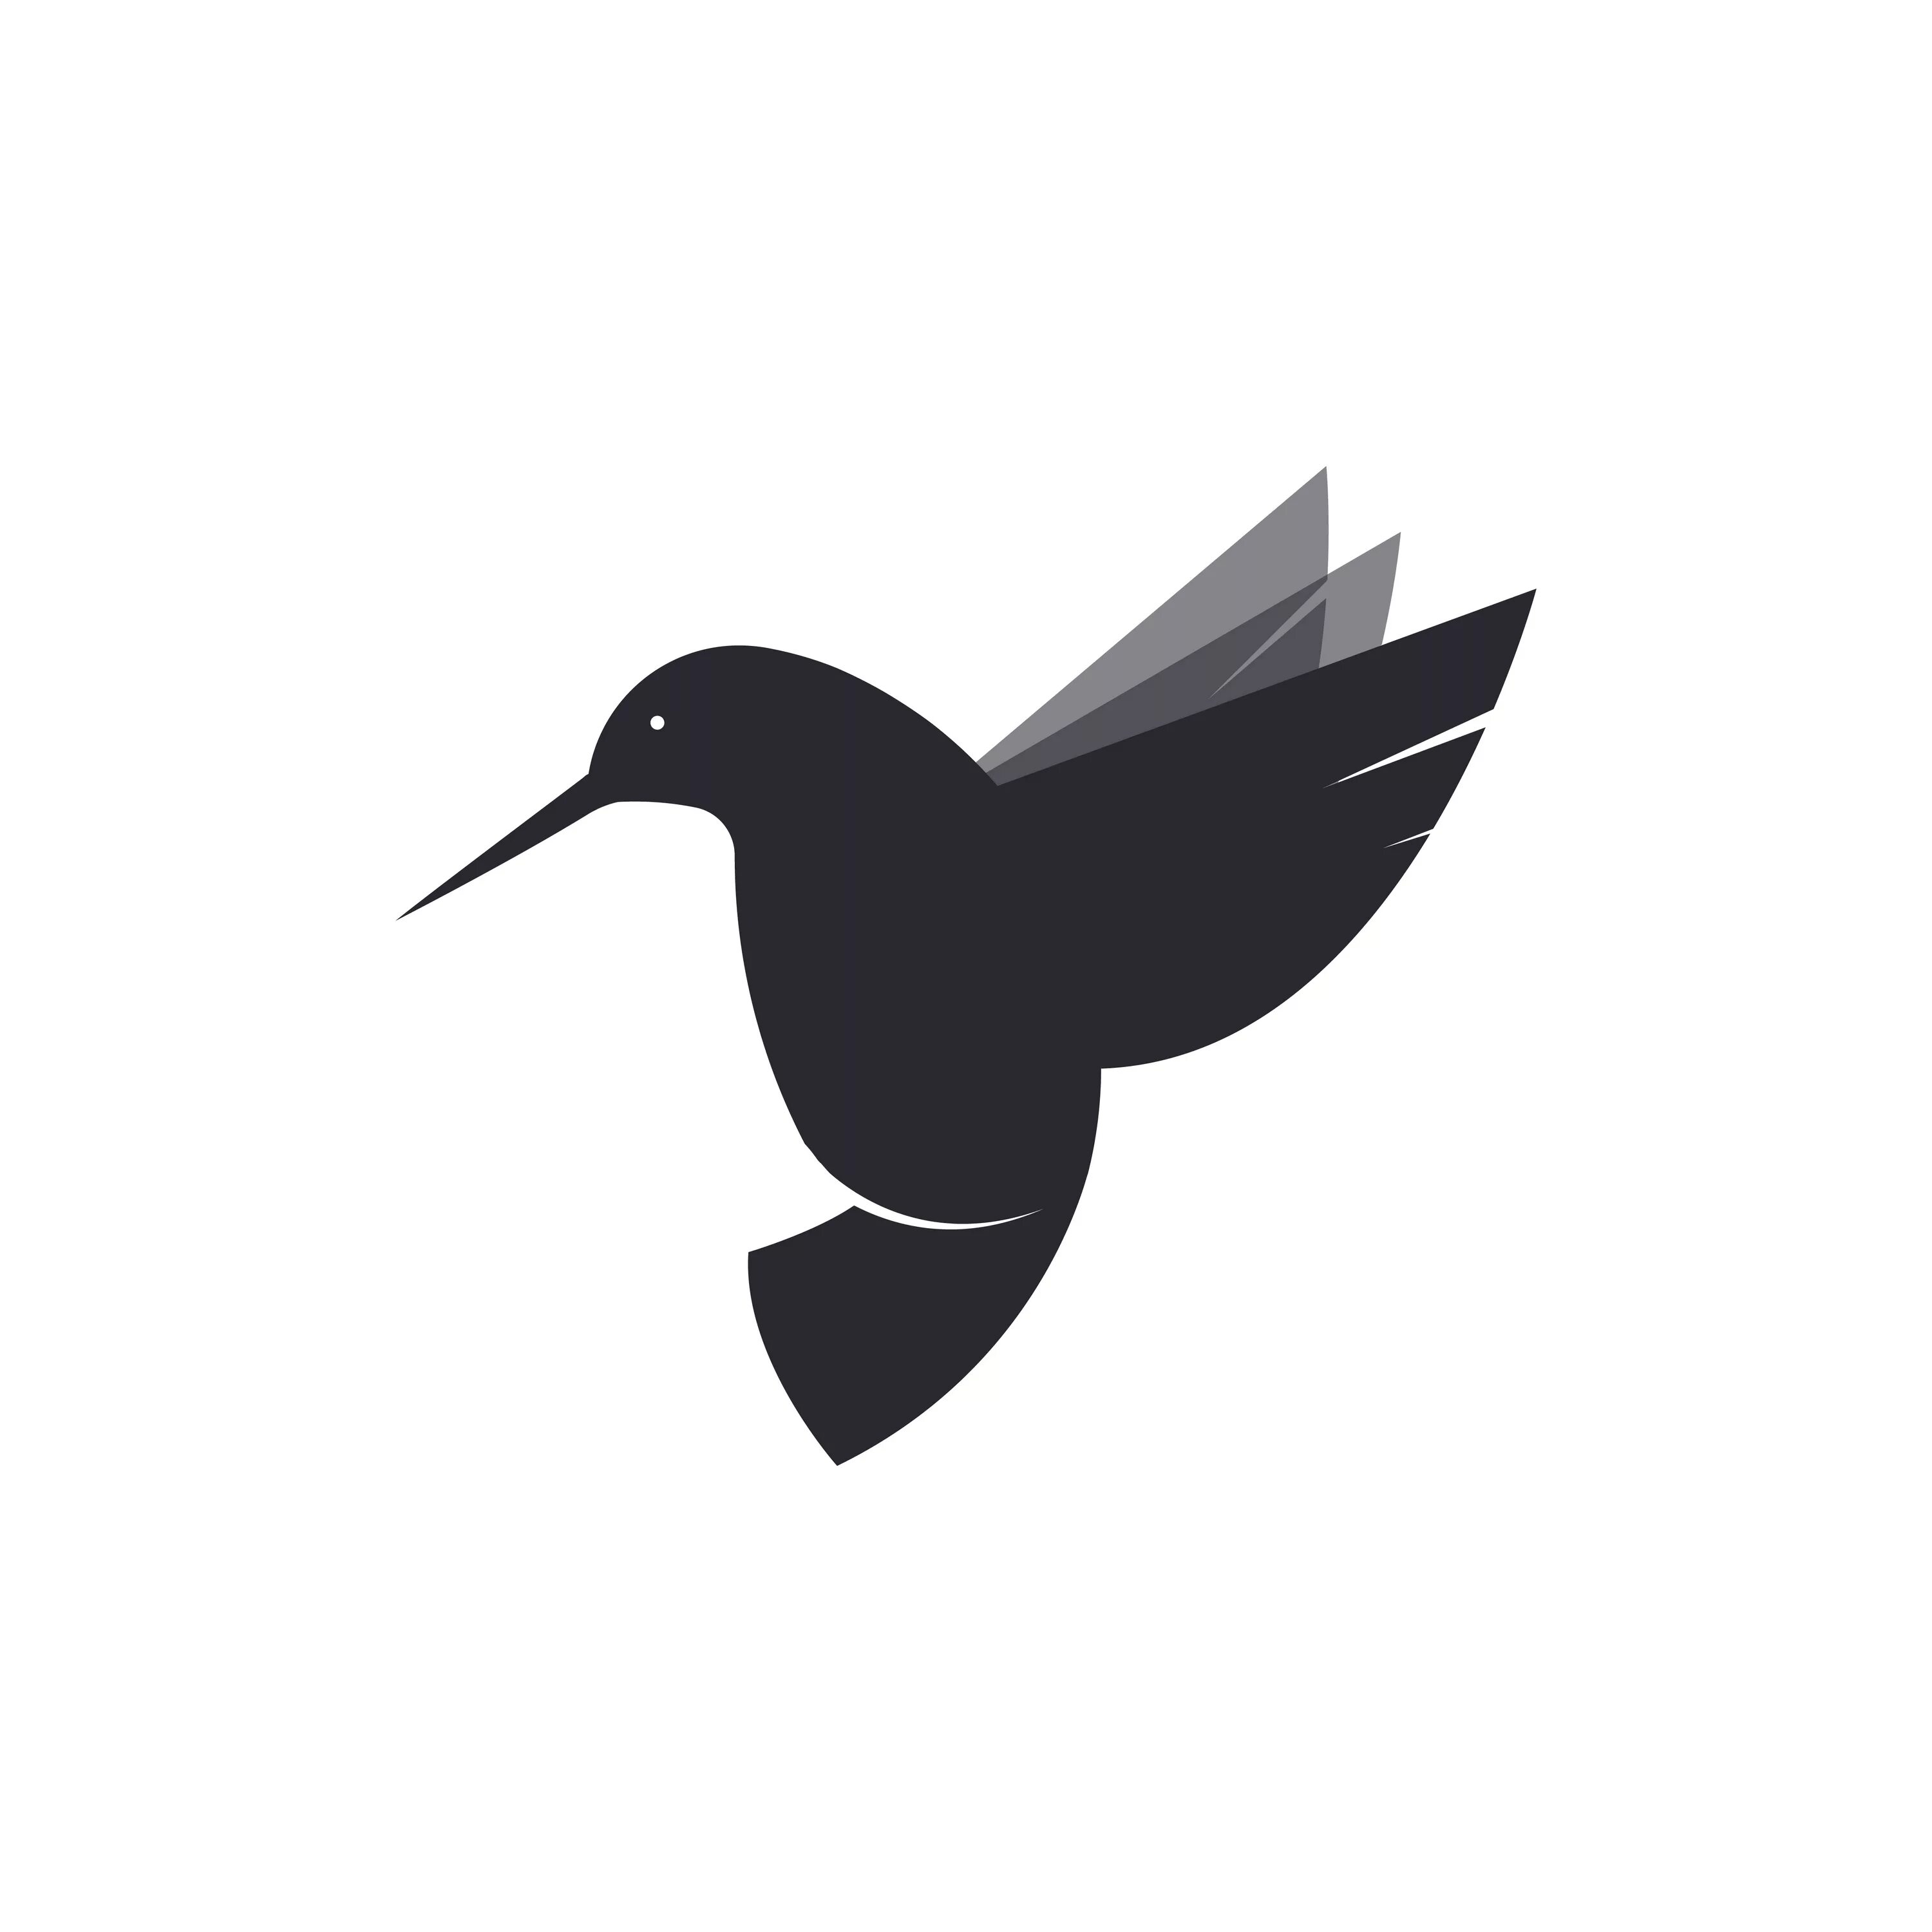 Логотип птица. Силуэт птицы логотип. Логотип с птичкой Колибри. Птички черные на прозрачном фоне.